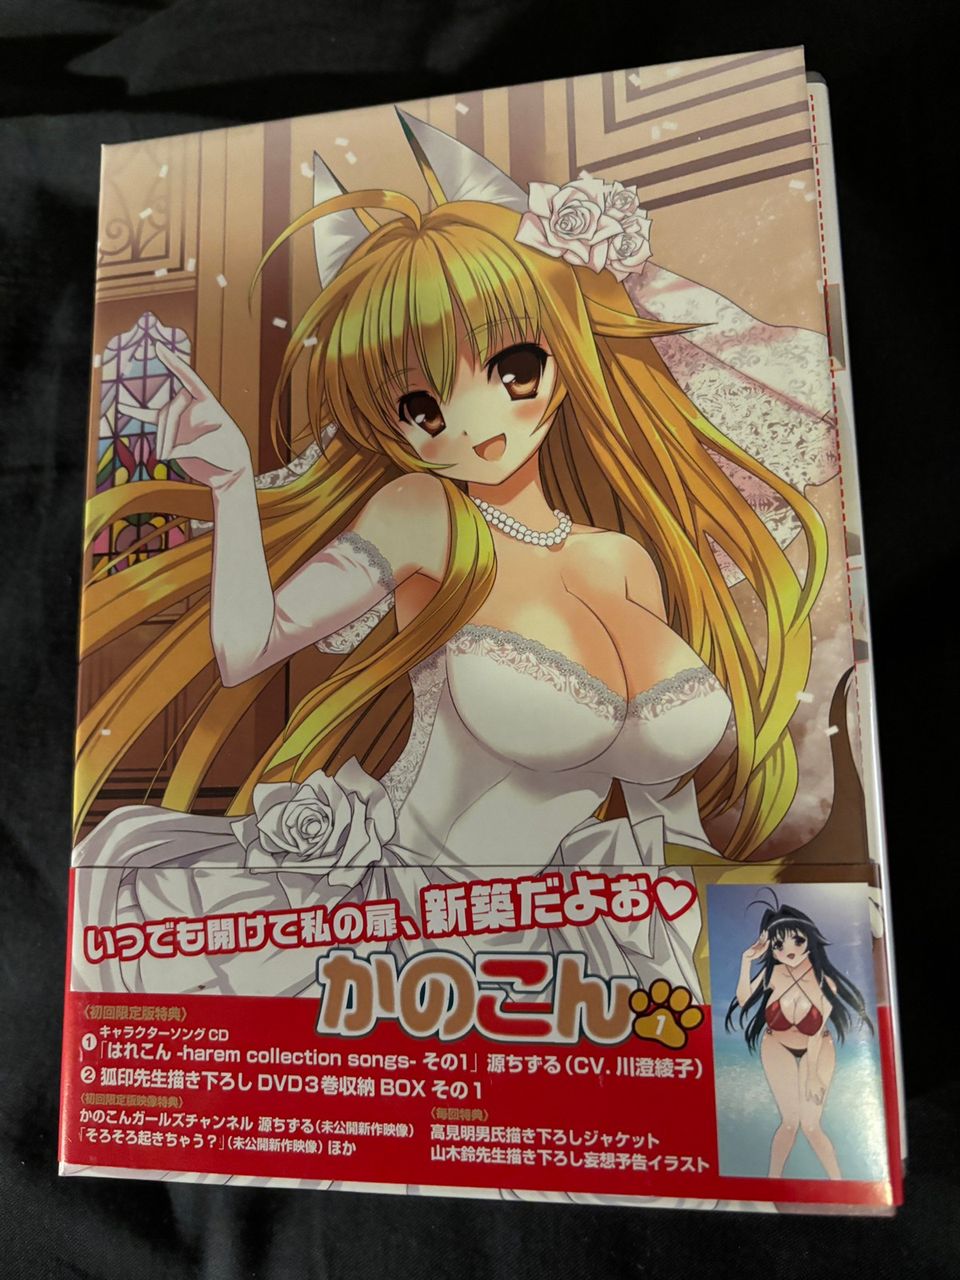 Kanokon Vol. 1 - First Press Limited Edition (Japan)